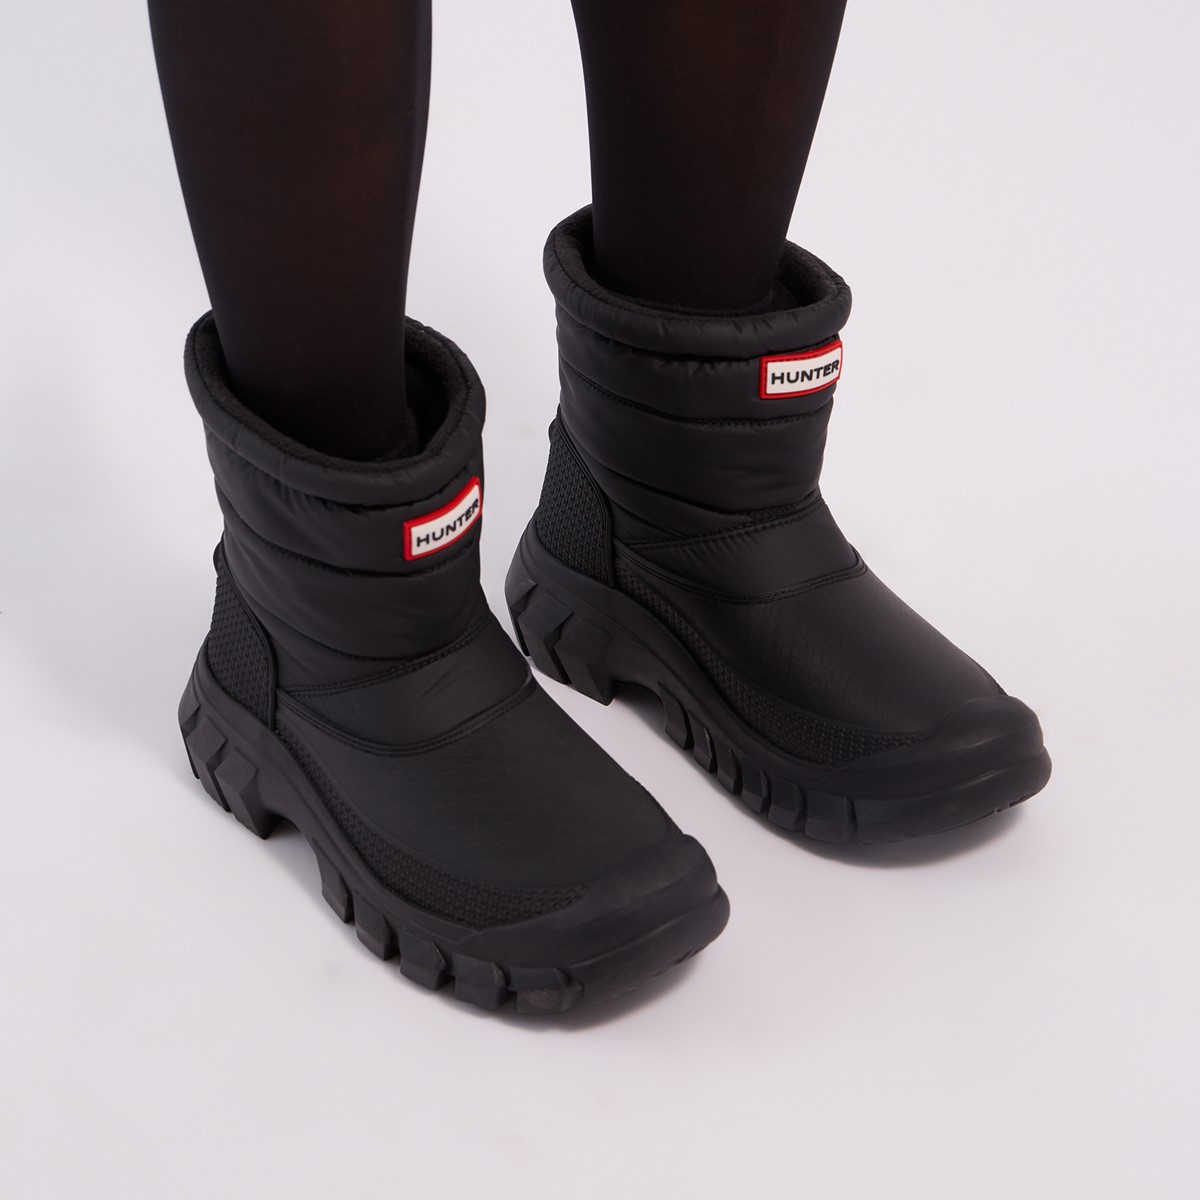 Women's Intreprid Insulated Short Nebula Winter Boots in Black